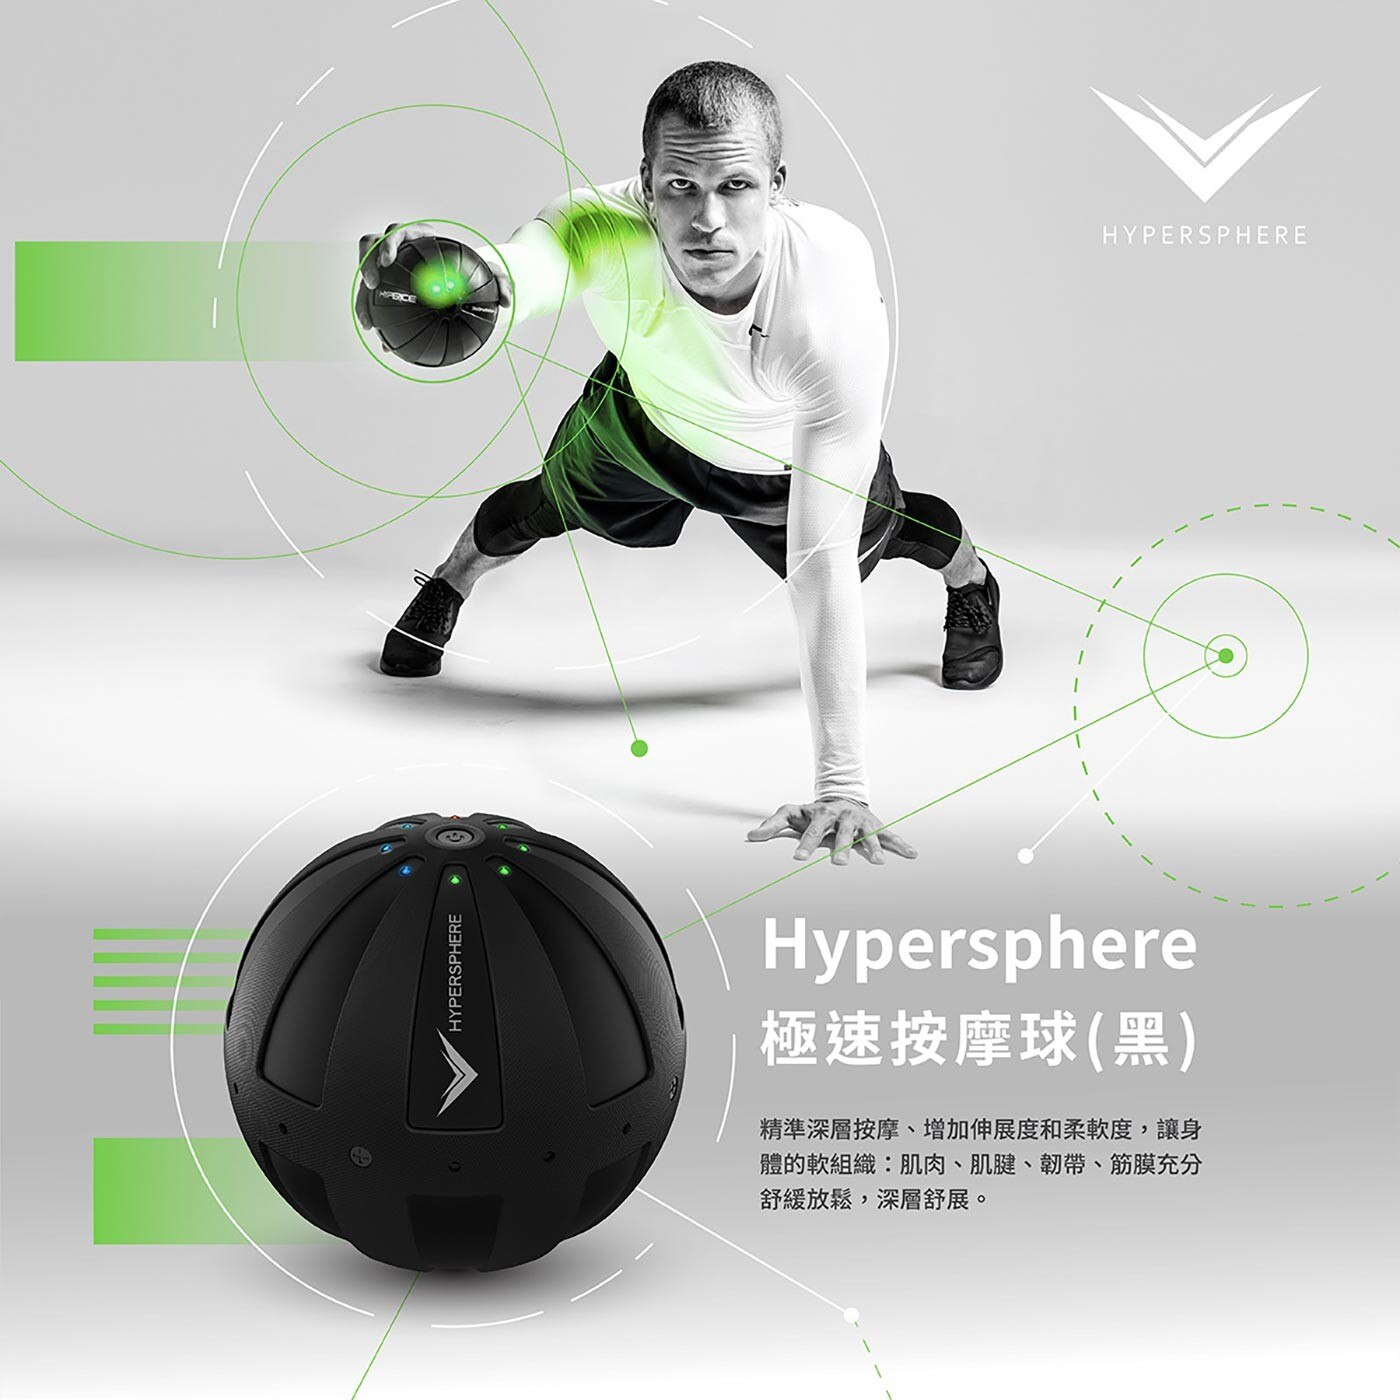 HYPERSPHERE 極速按摩球是職業運動員、奧林匹克選手使用款，採用業界最高等級的規格與材質，打造出最適壓力與震動效果，能使運動後的身體迅速回復至最好的狀態。